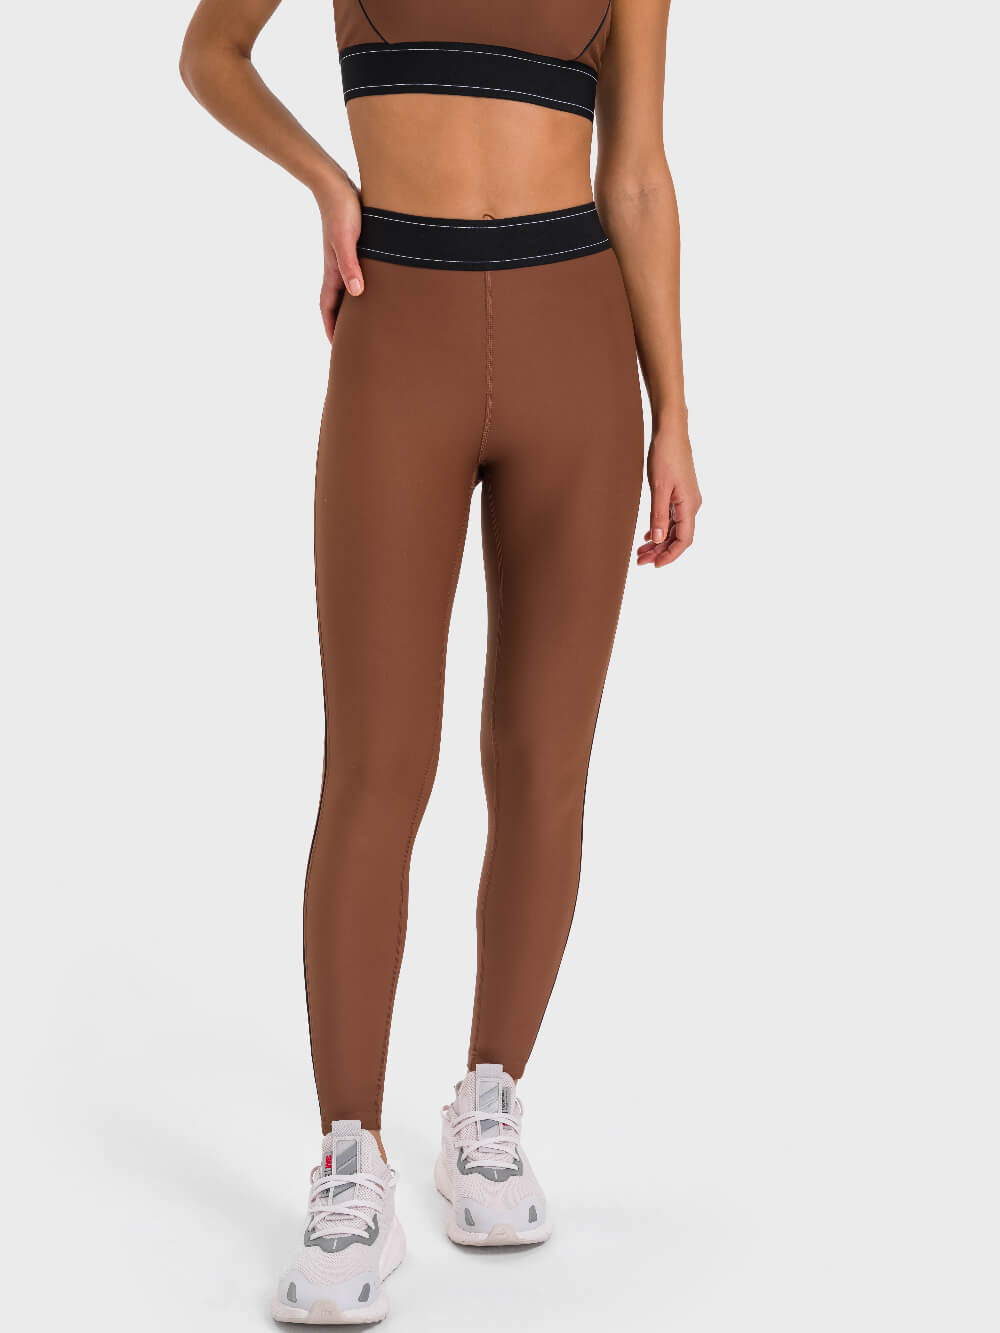 Nepoagym UNIVERSE 25 Brushed Yoga Pants Faux Leather Women Workout